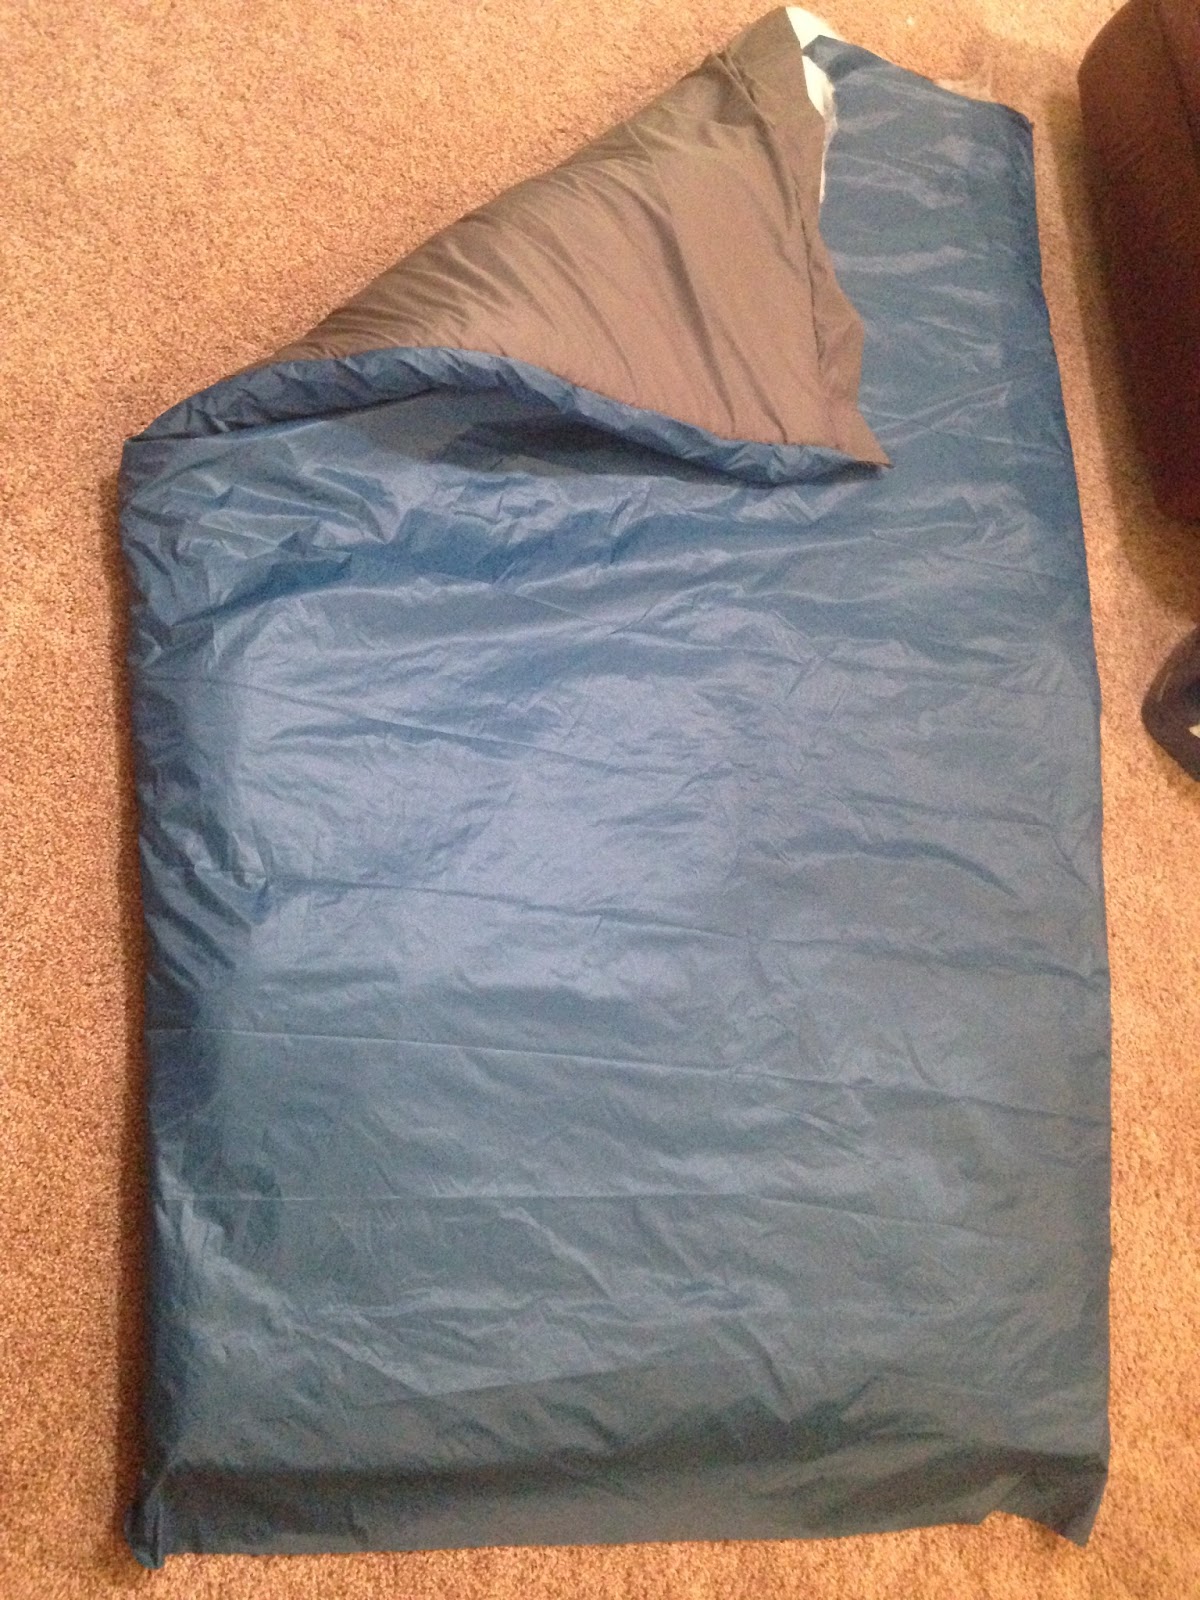 Wayfinder Ali: DIY 20°F Ultralight Backpacking Quilt Part 3 - Pinning ...